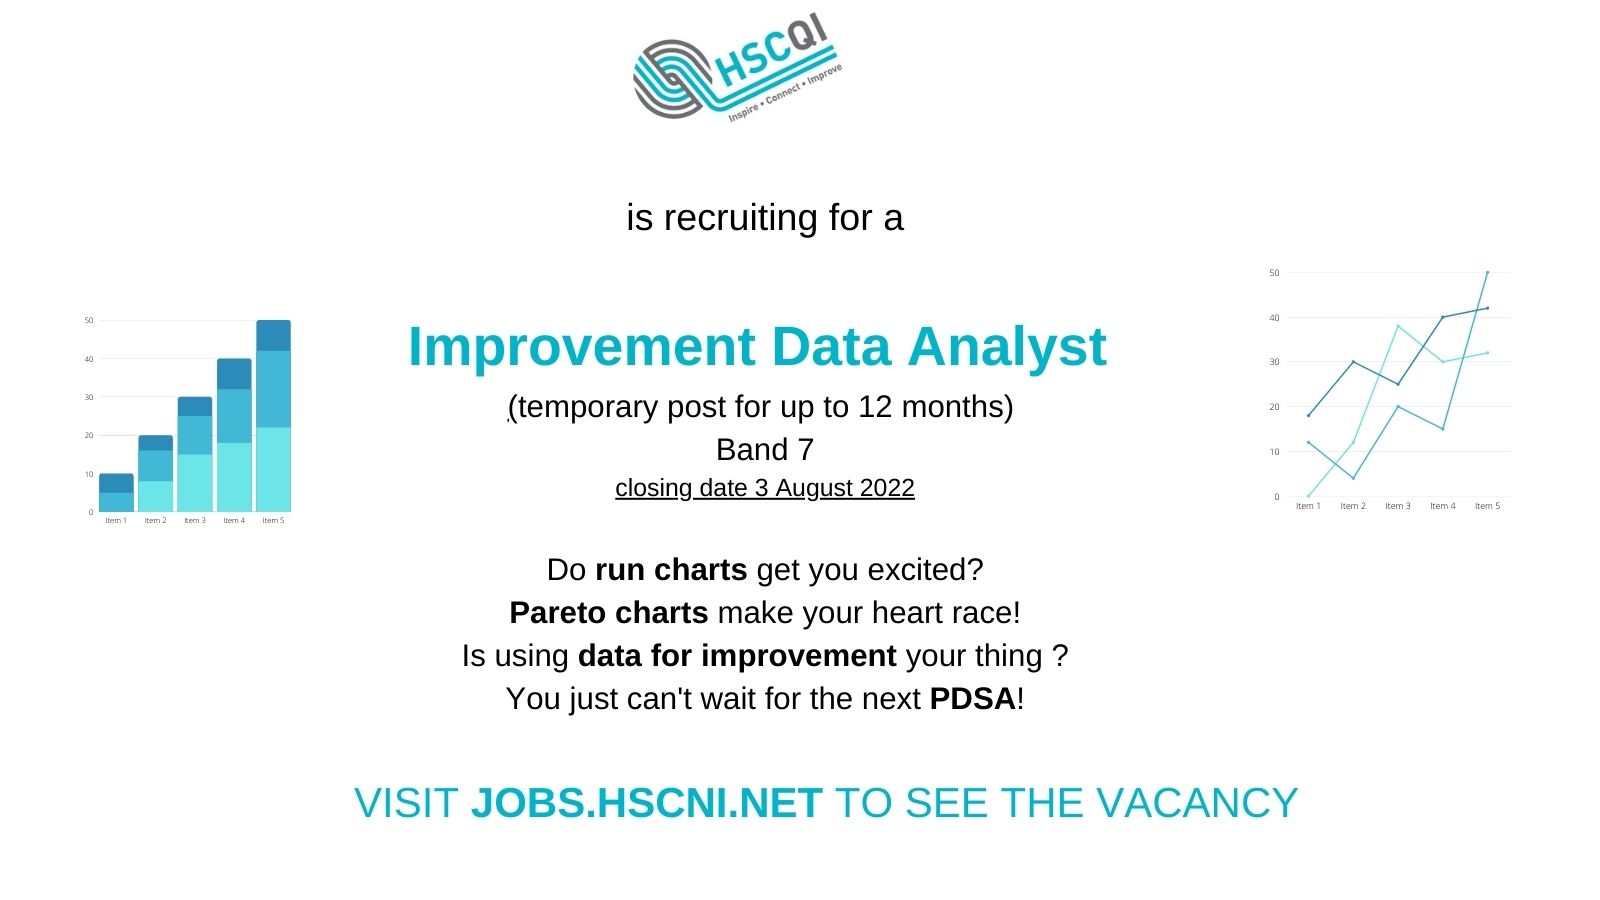 Improvemnet Data Analyst vacancy